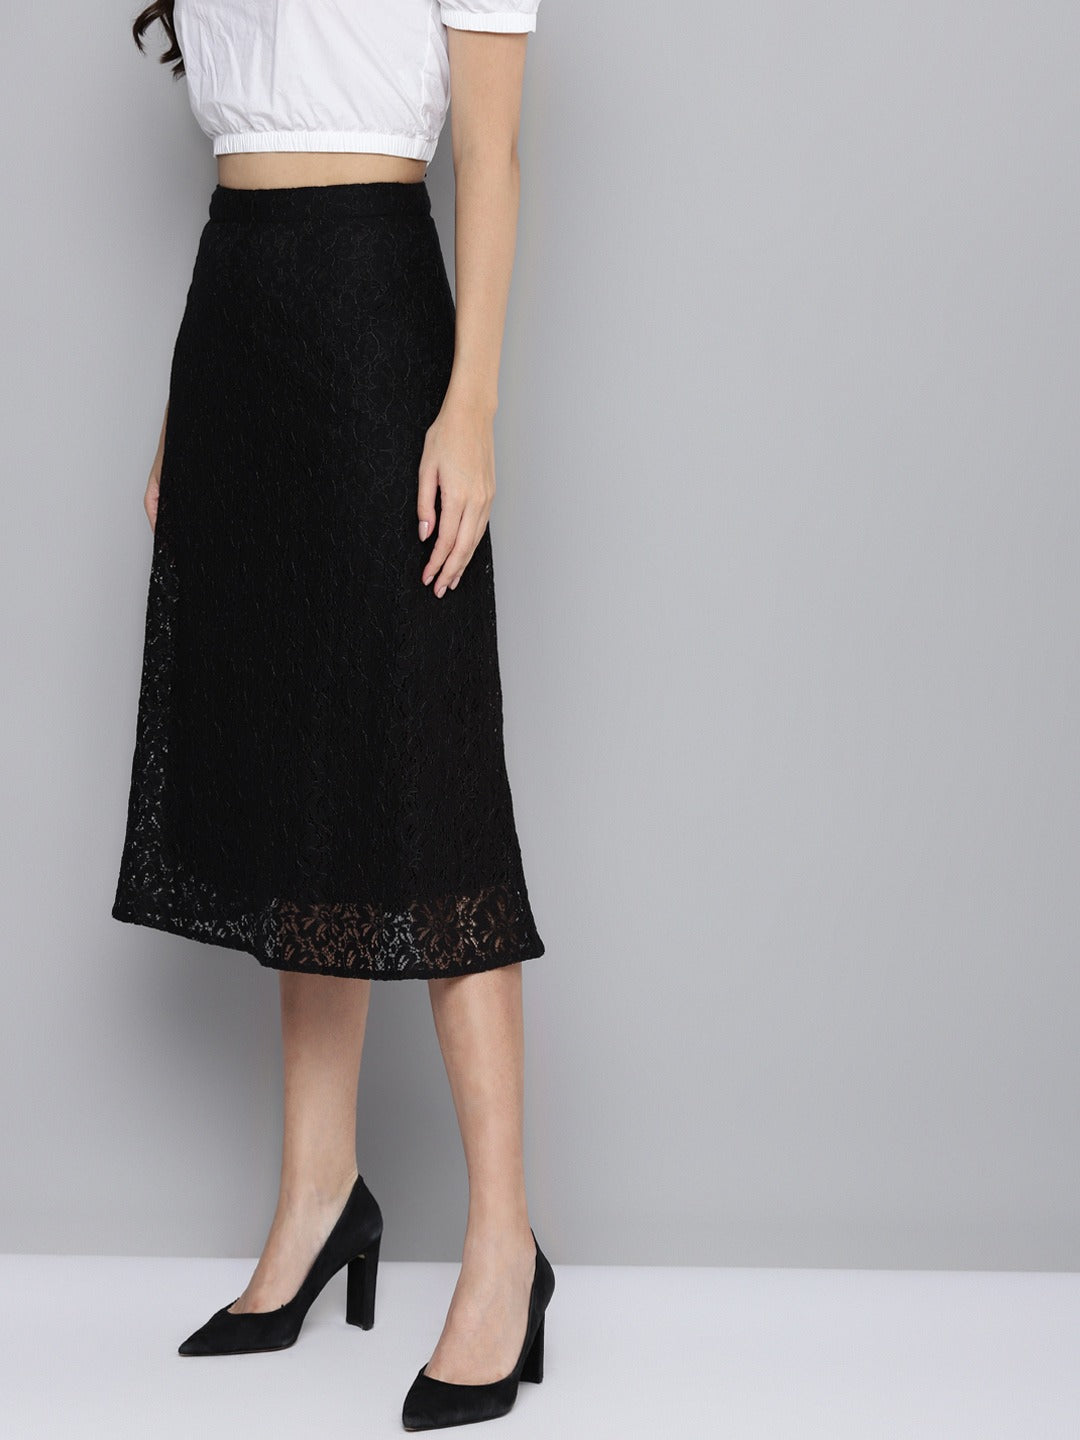 Buy Women Black Lace A-Line Skirt Online at Sassafras